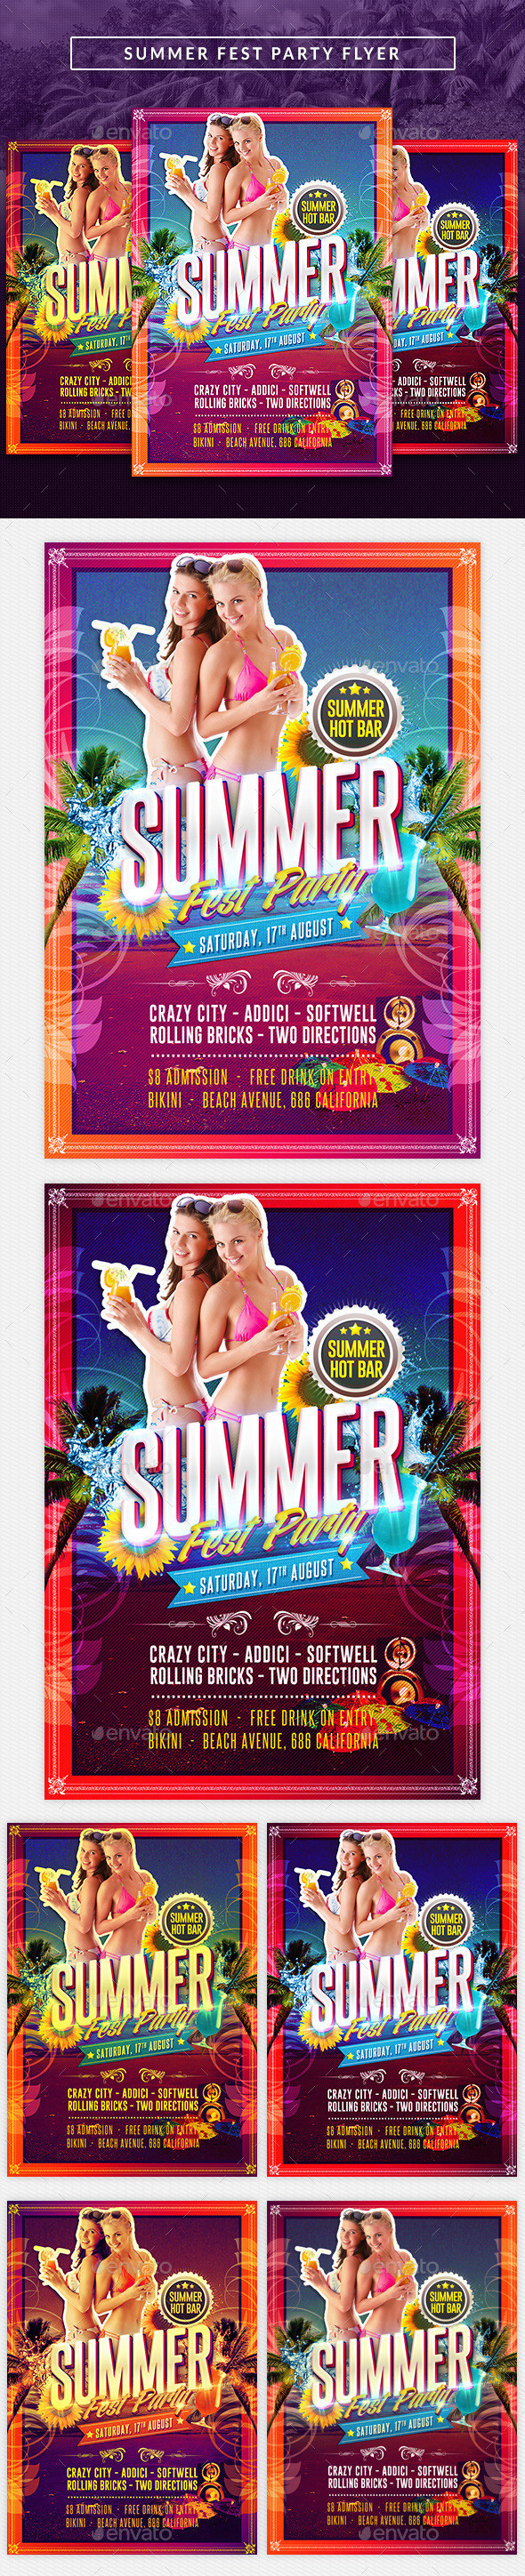 Summer fest party flyer showcase